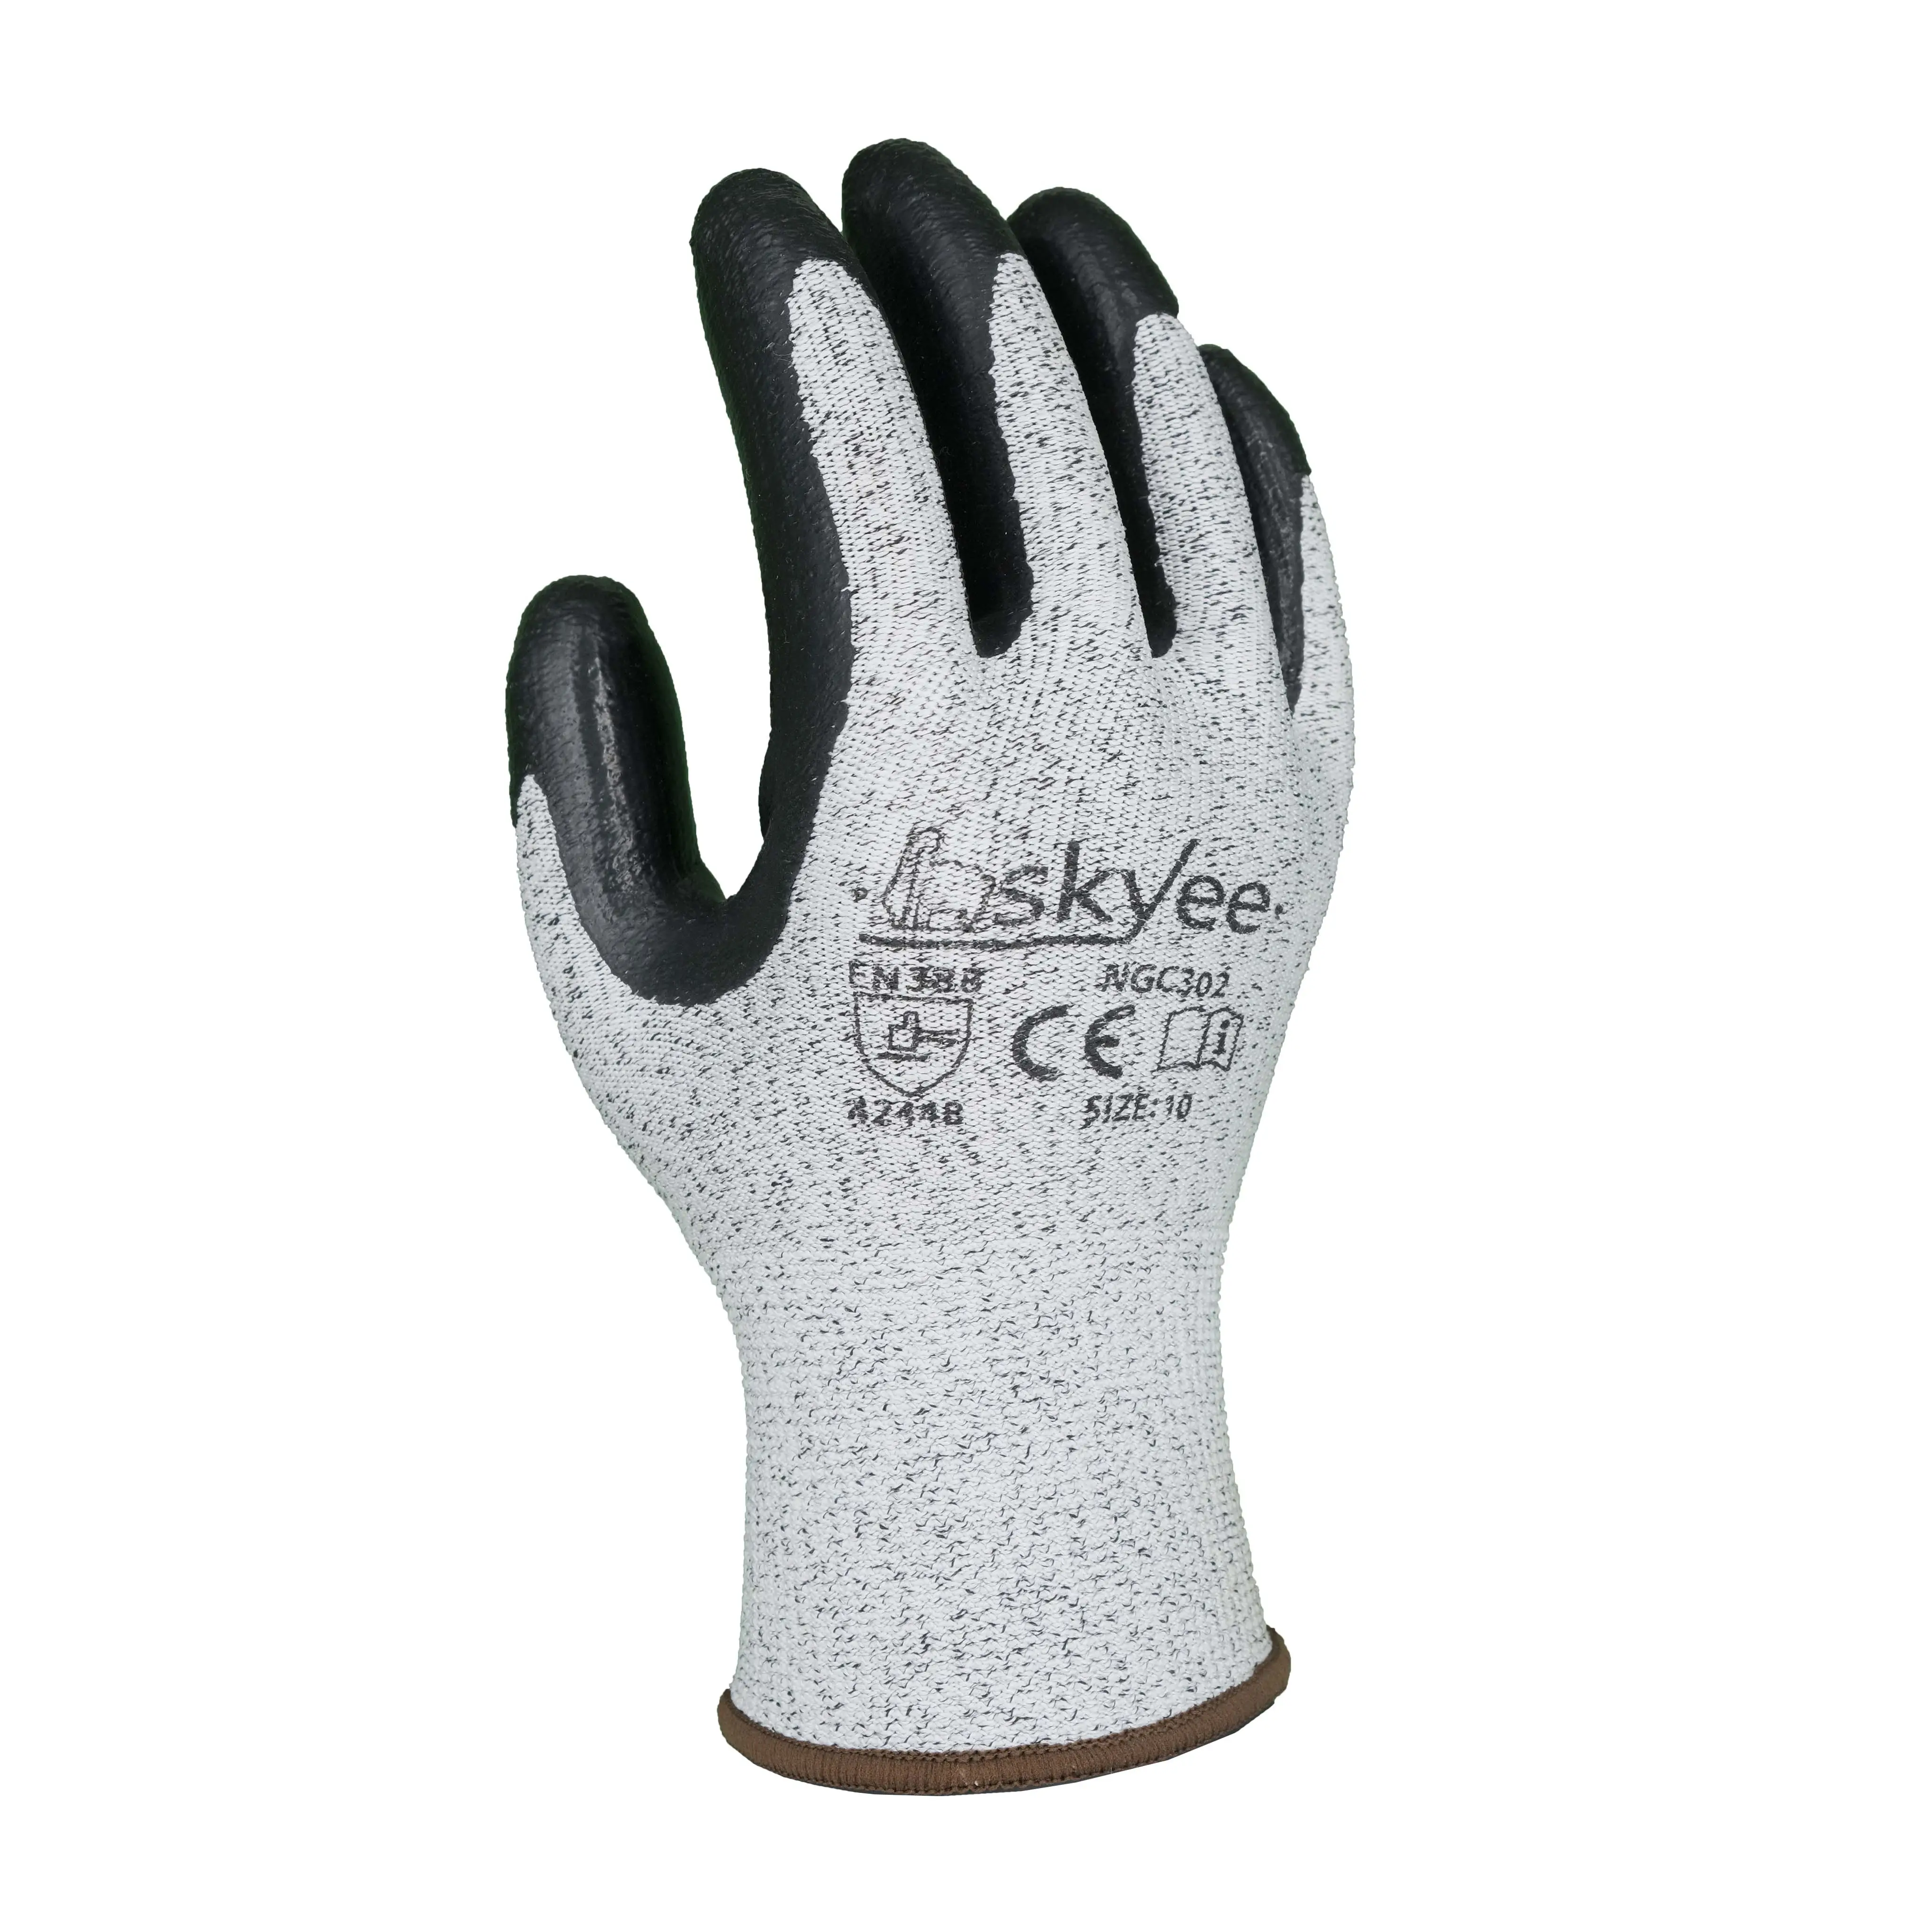 SKYEE nitrile gloves nylon anti cut gardening work gloves safety construction industrial gloves